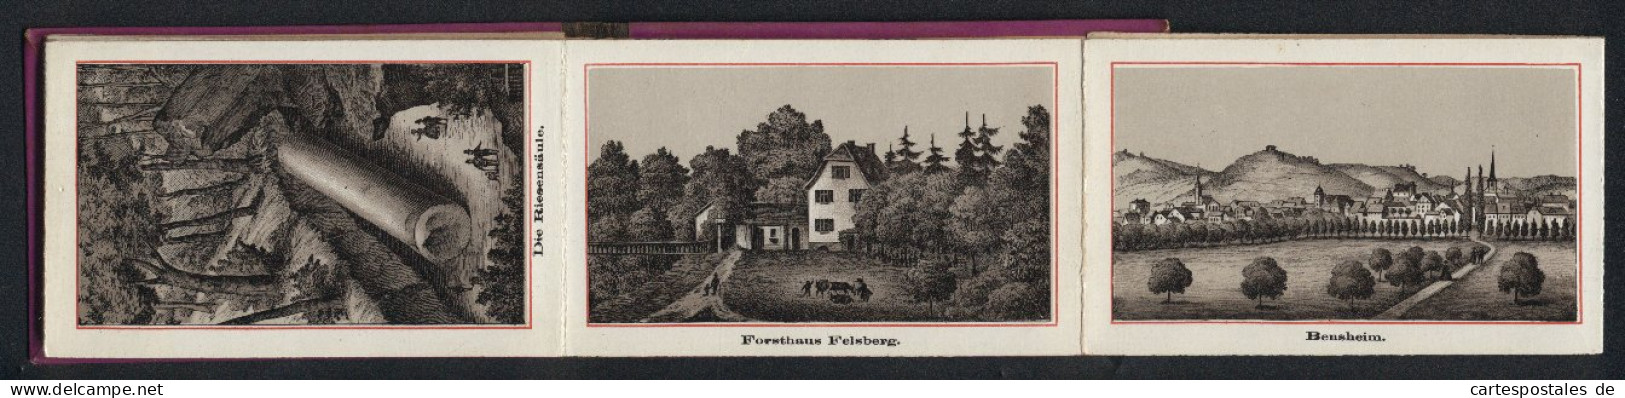 Leporello-Album Bergstrasse Mit 12 Lithographie-Ansichten, Bensheim, Heppenheim, Forsthaus Felsberg, Riesensäule, Sch  - Lithografieën